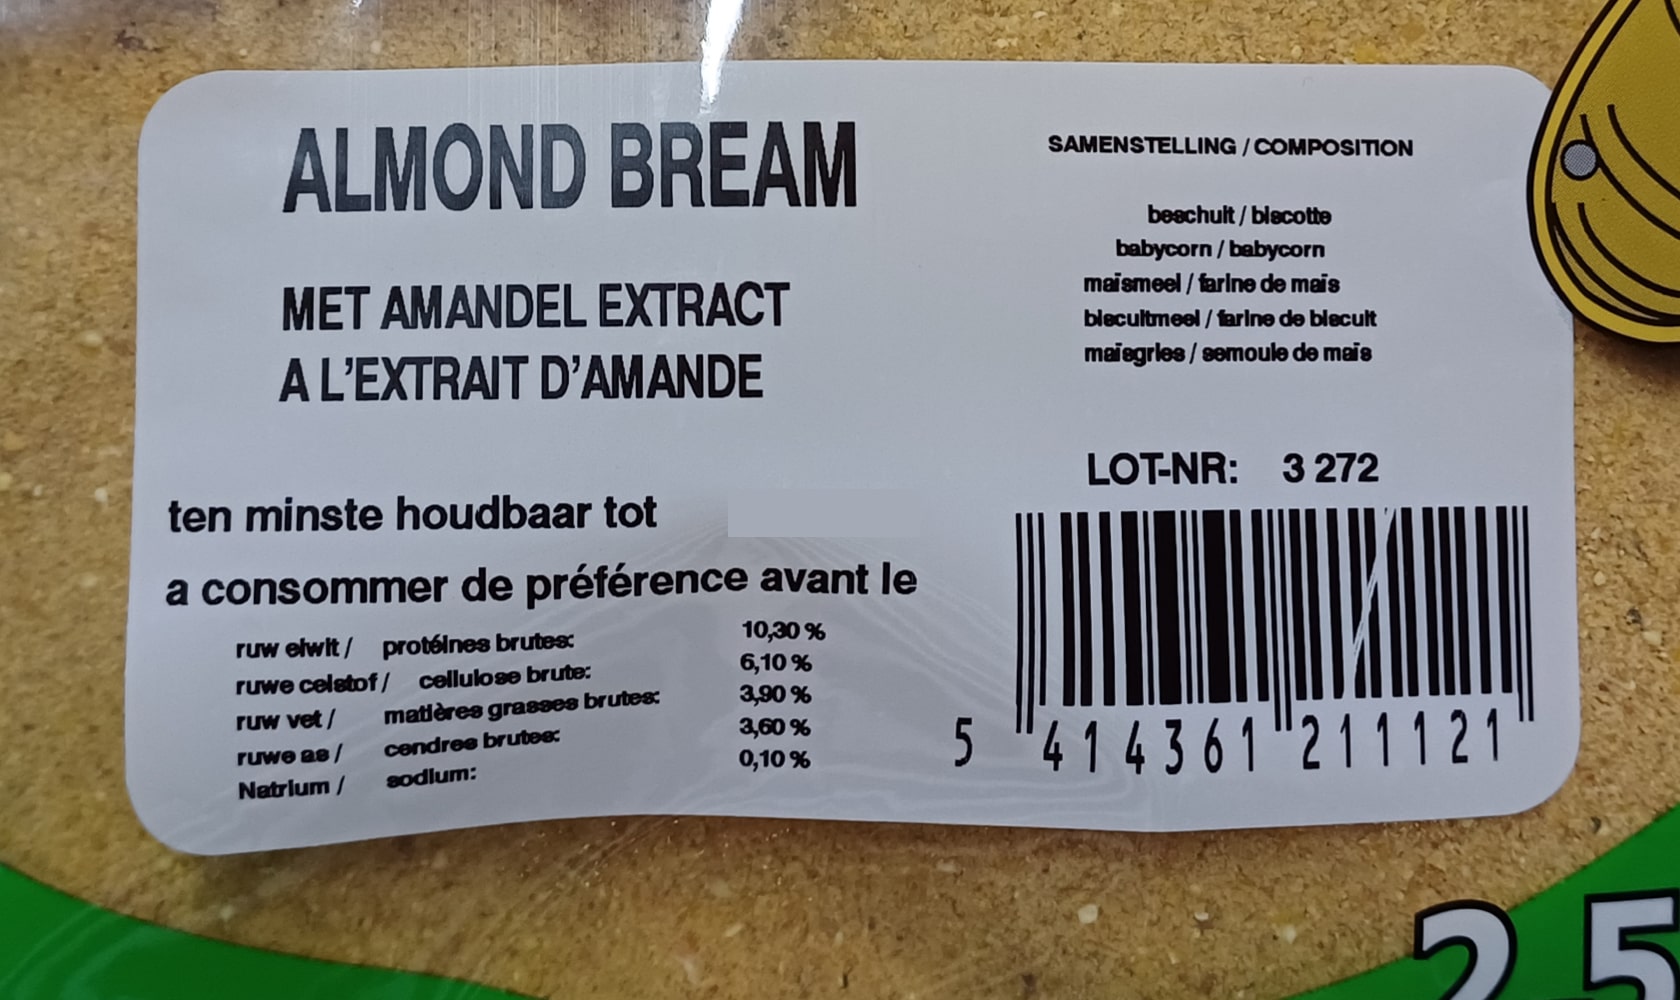 eurofish almond bream 2.5kg